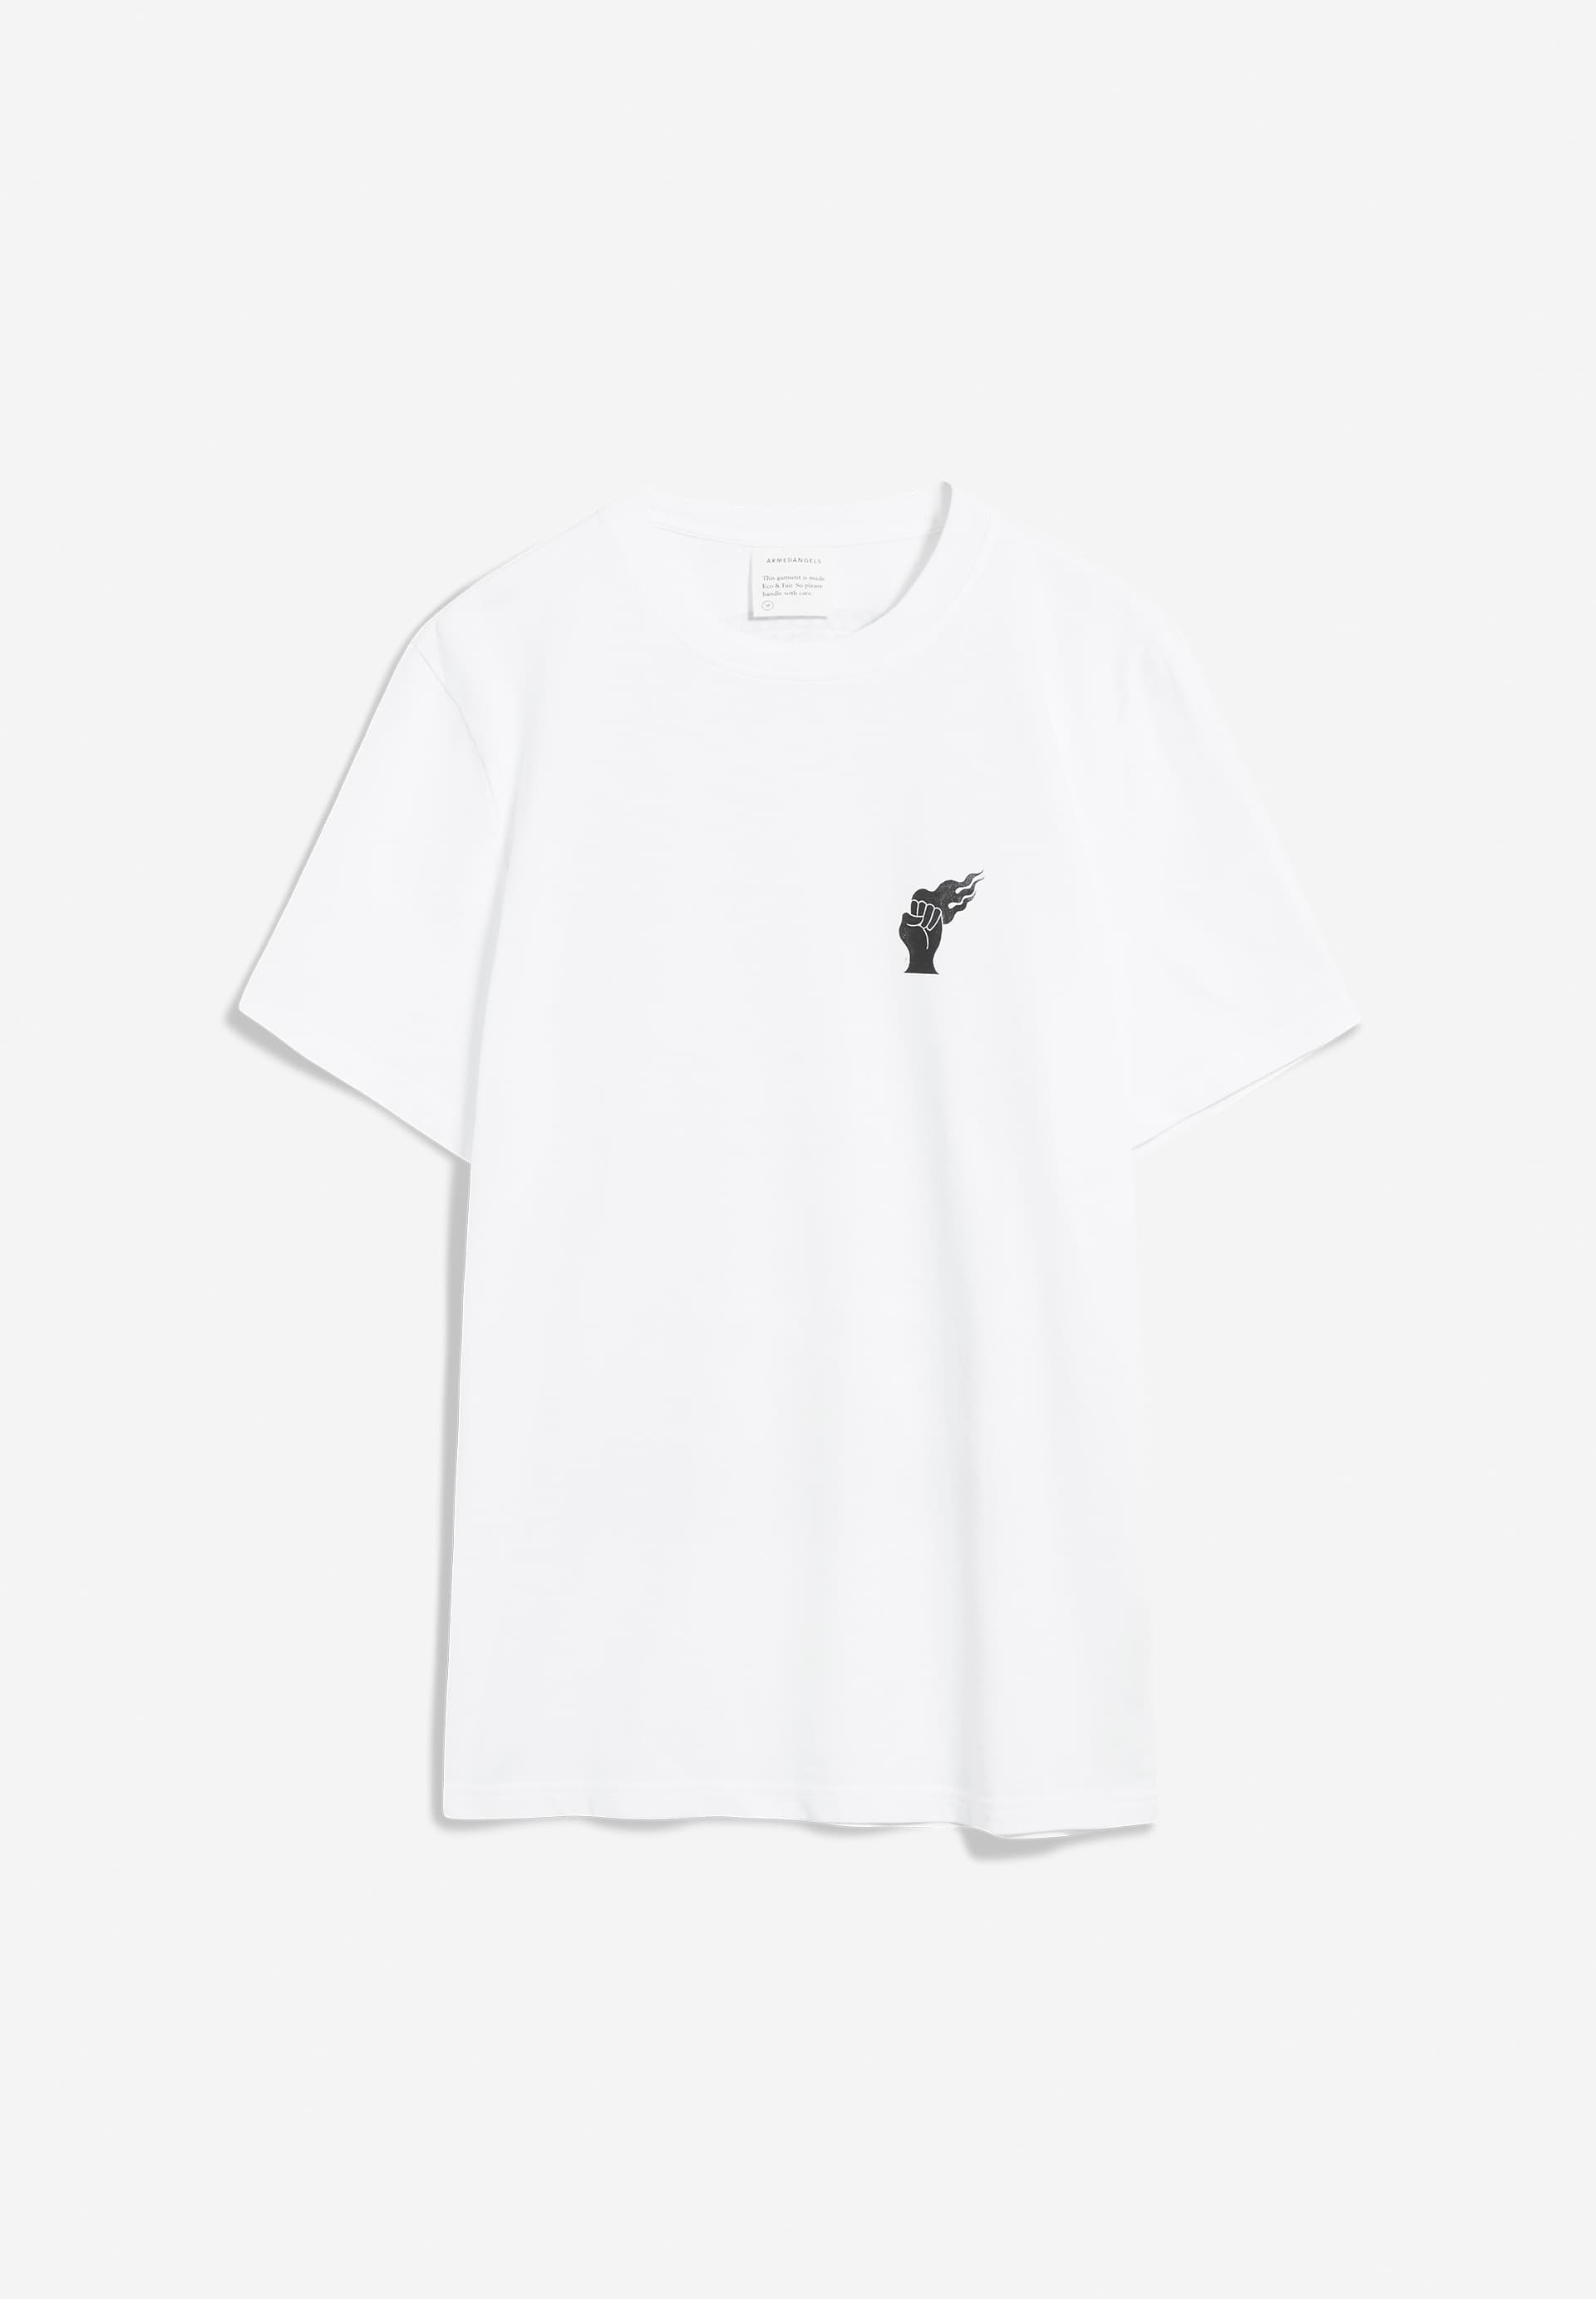 AADO SOLIDARITY 01 T-Shirt made of organic cotton (mens fit)